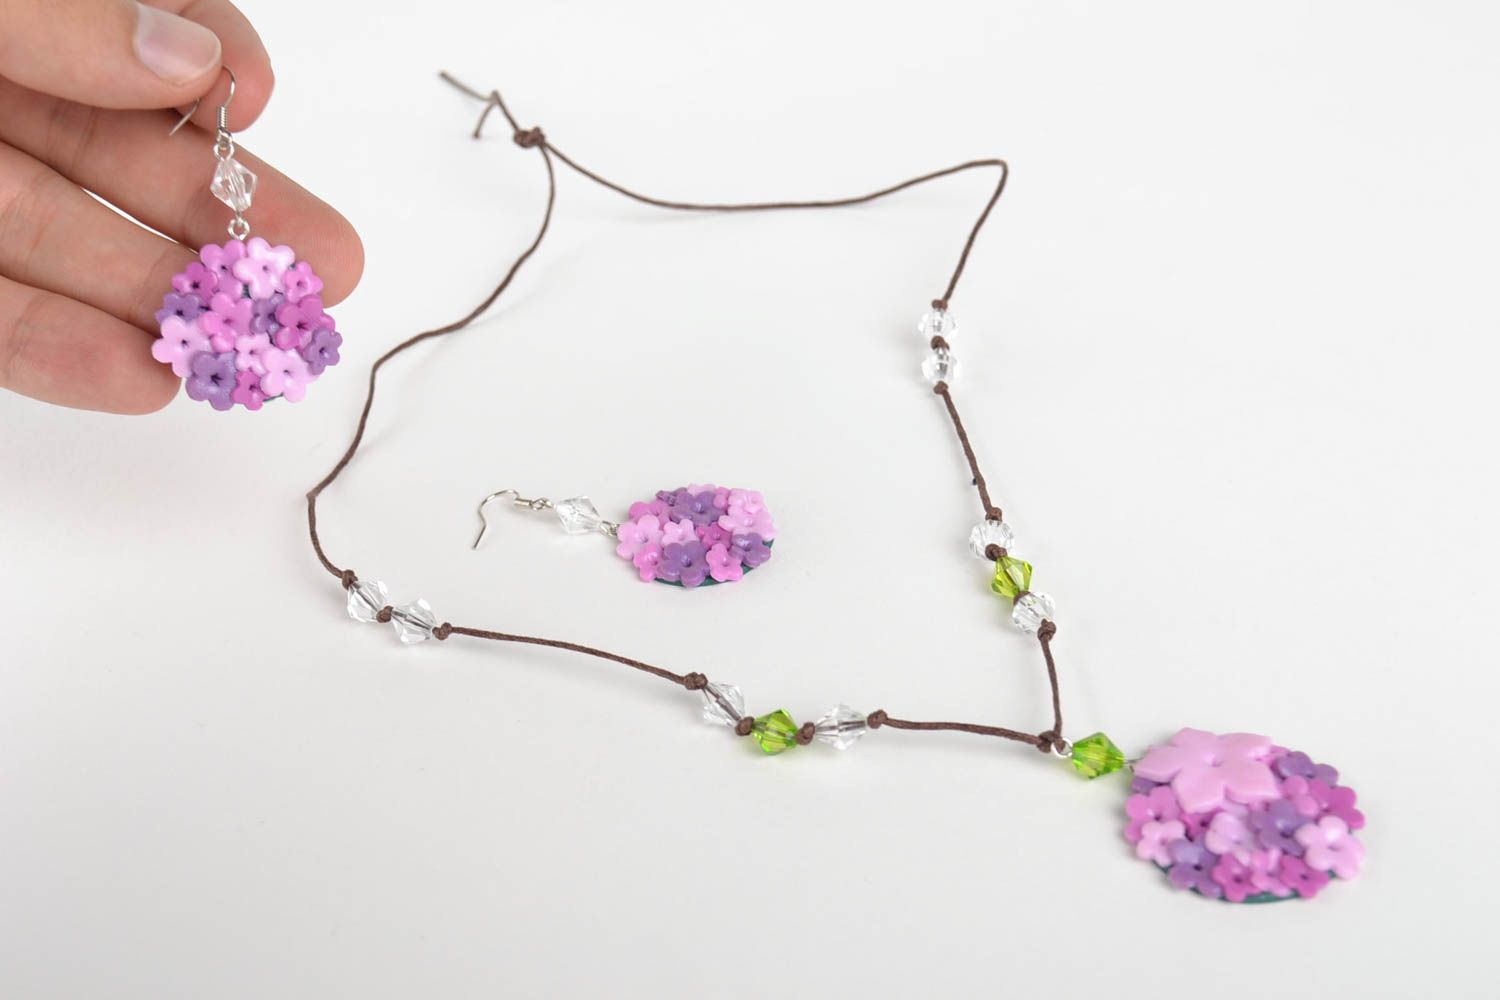 Flower jewelry handmade jewelry set dangling earrings pendant necklace gift idea photo 2